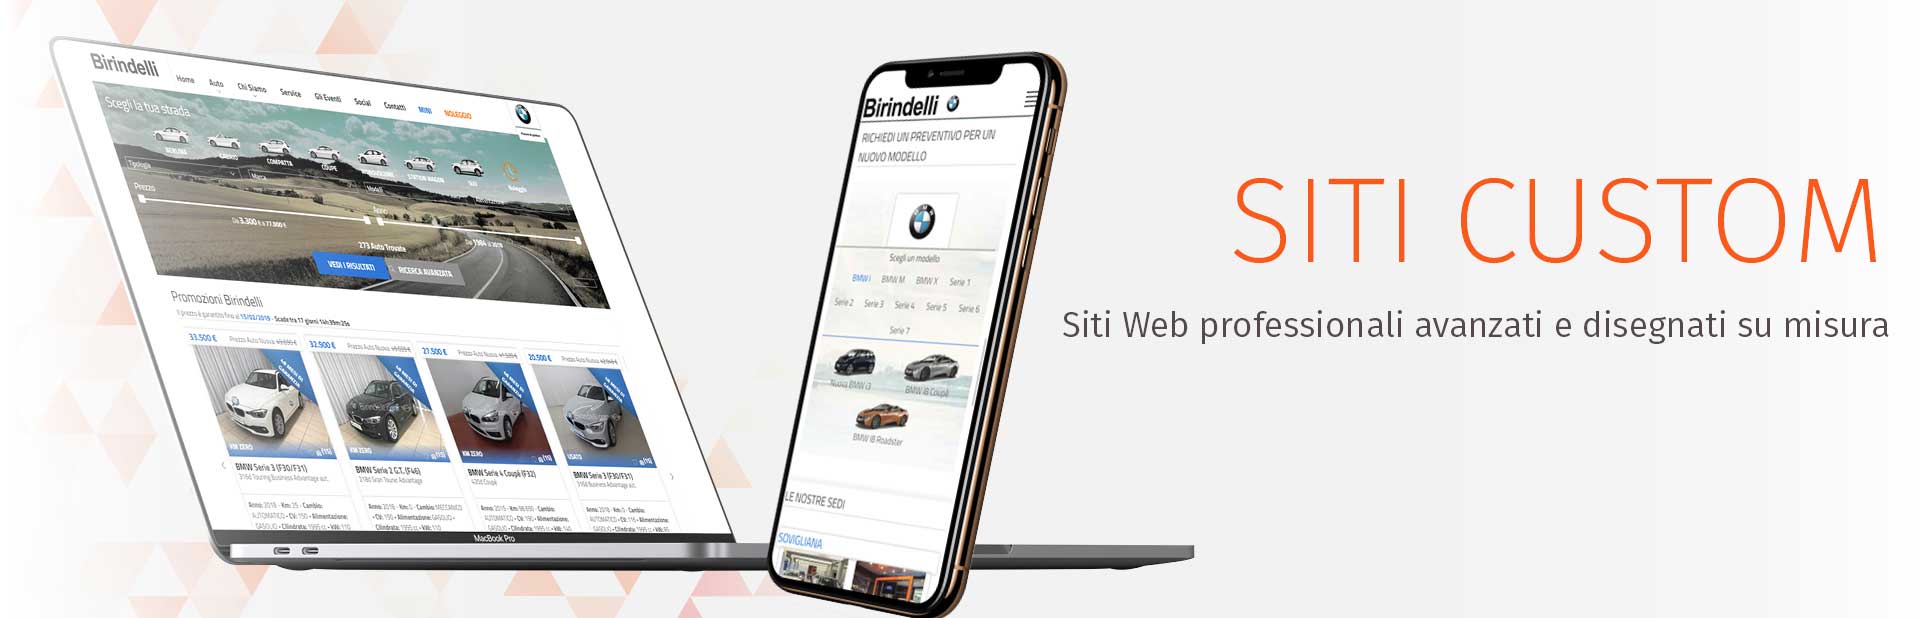 IBI Internet Business Innovation - Siti internet automotive